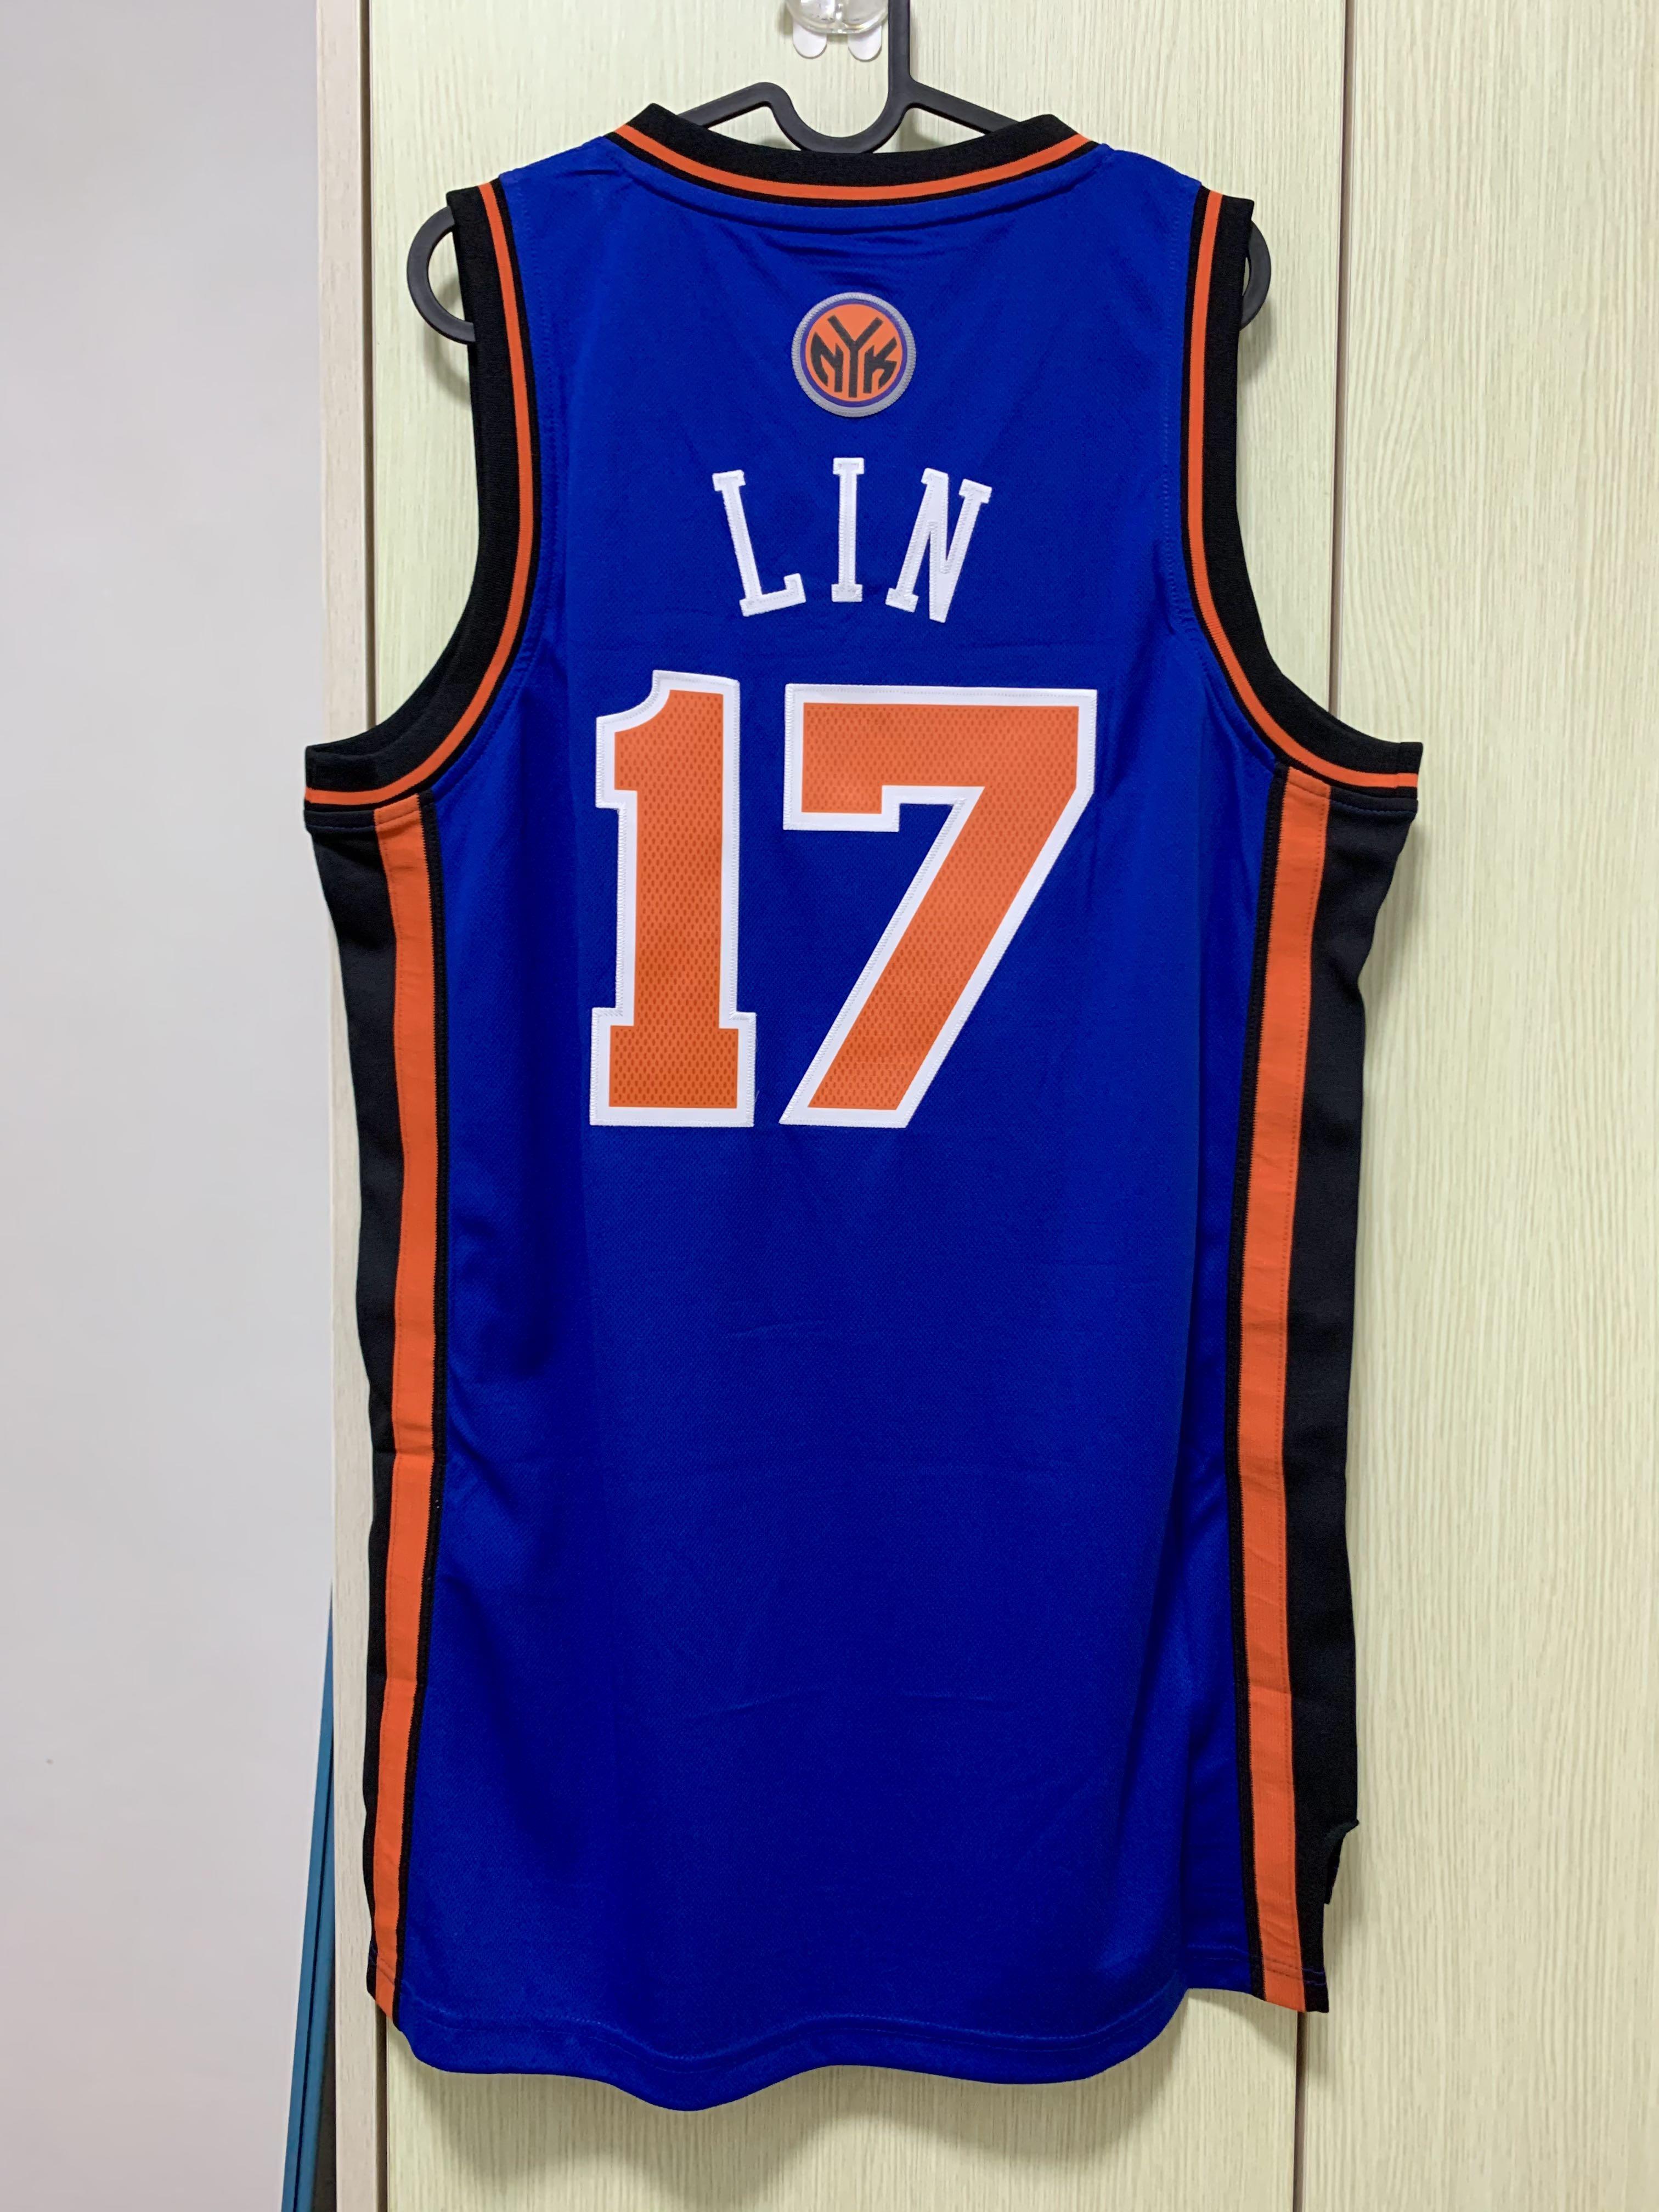 NBA New York Knicks Jeremy Lin #17 Replica Jersey